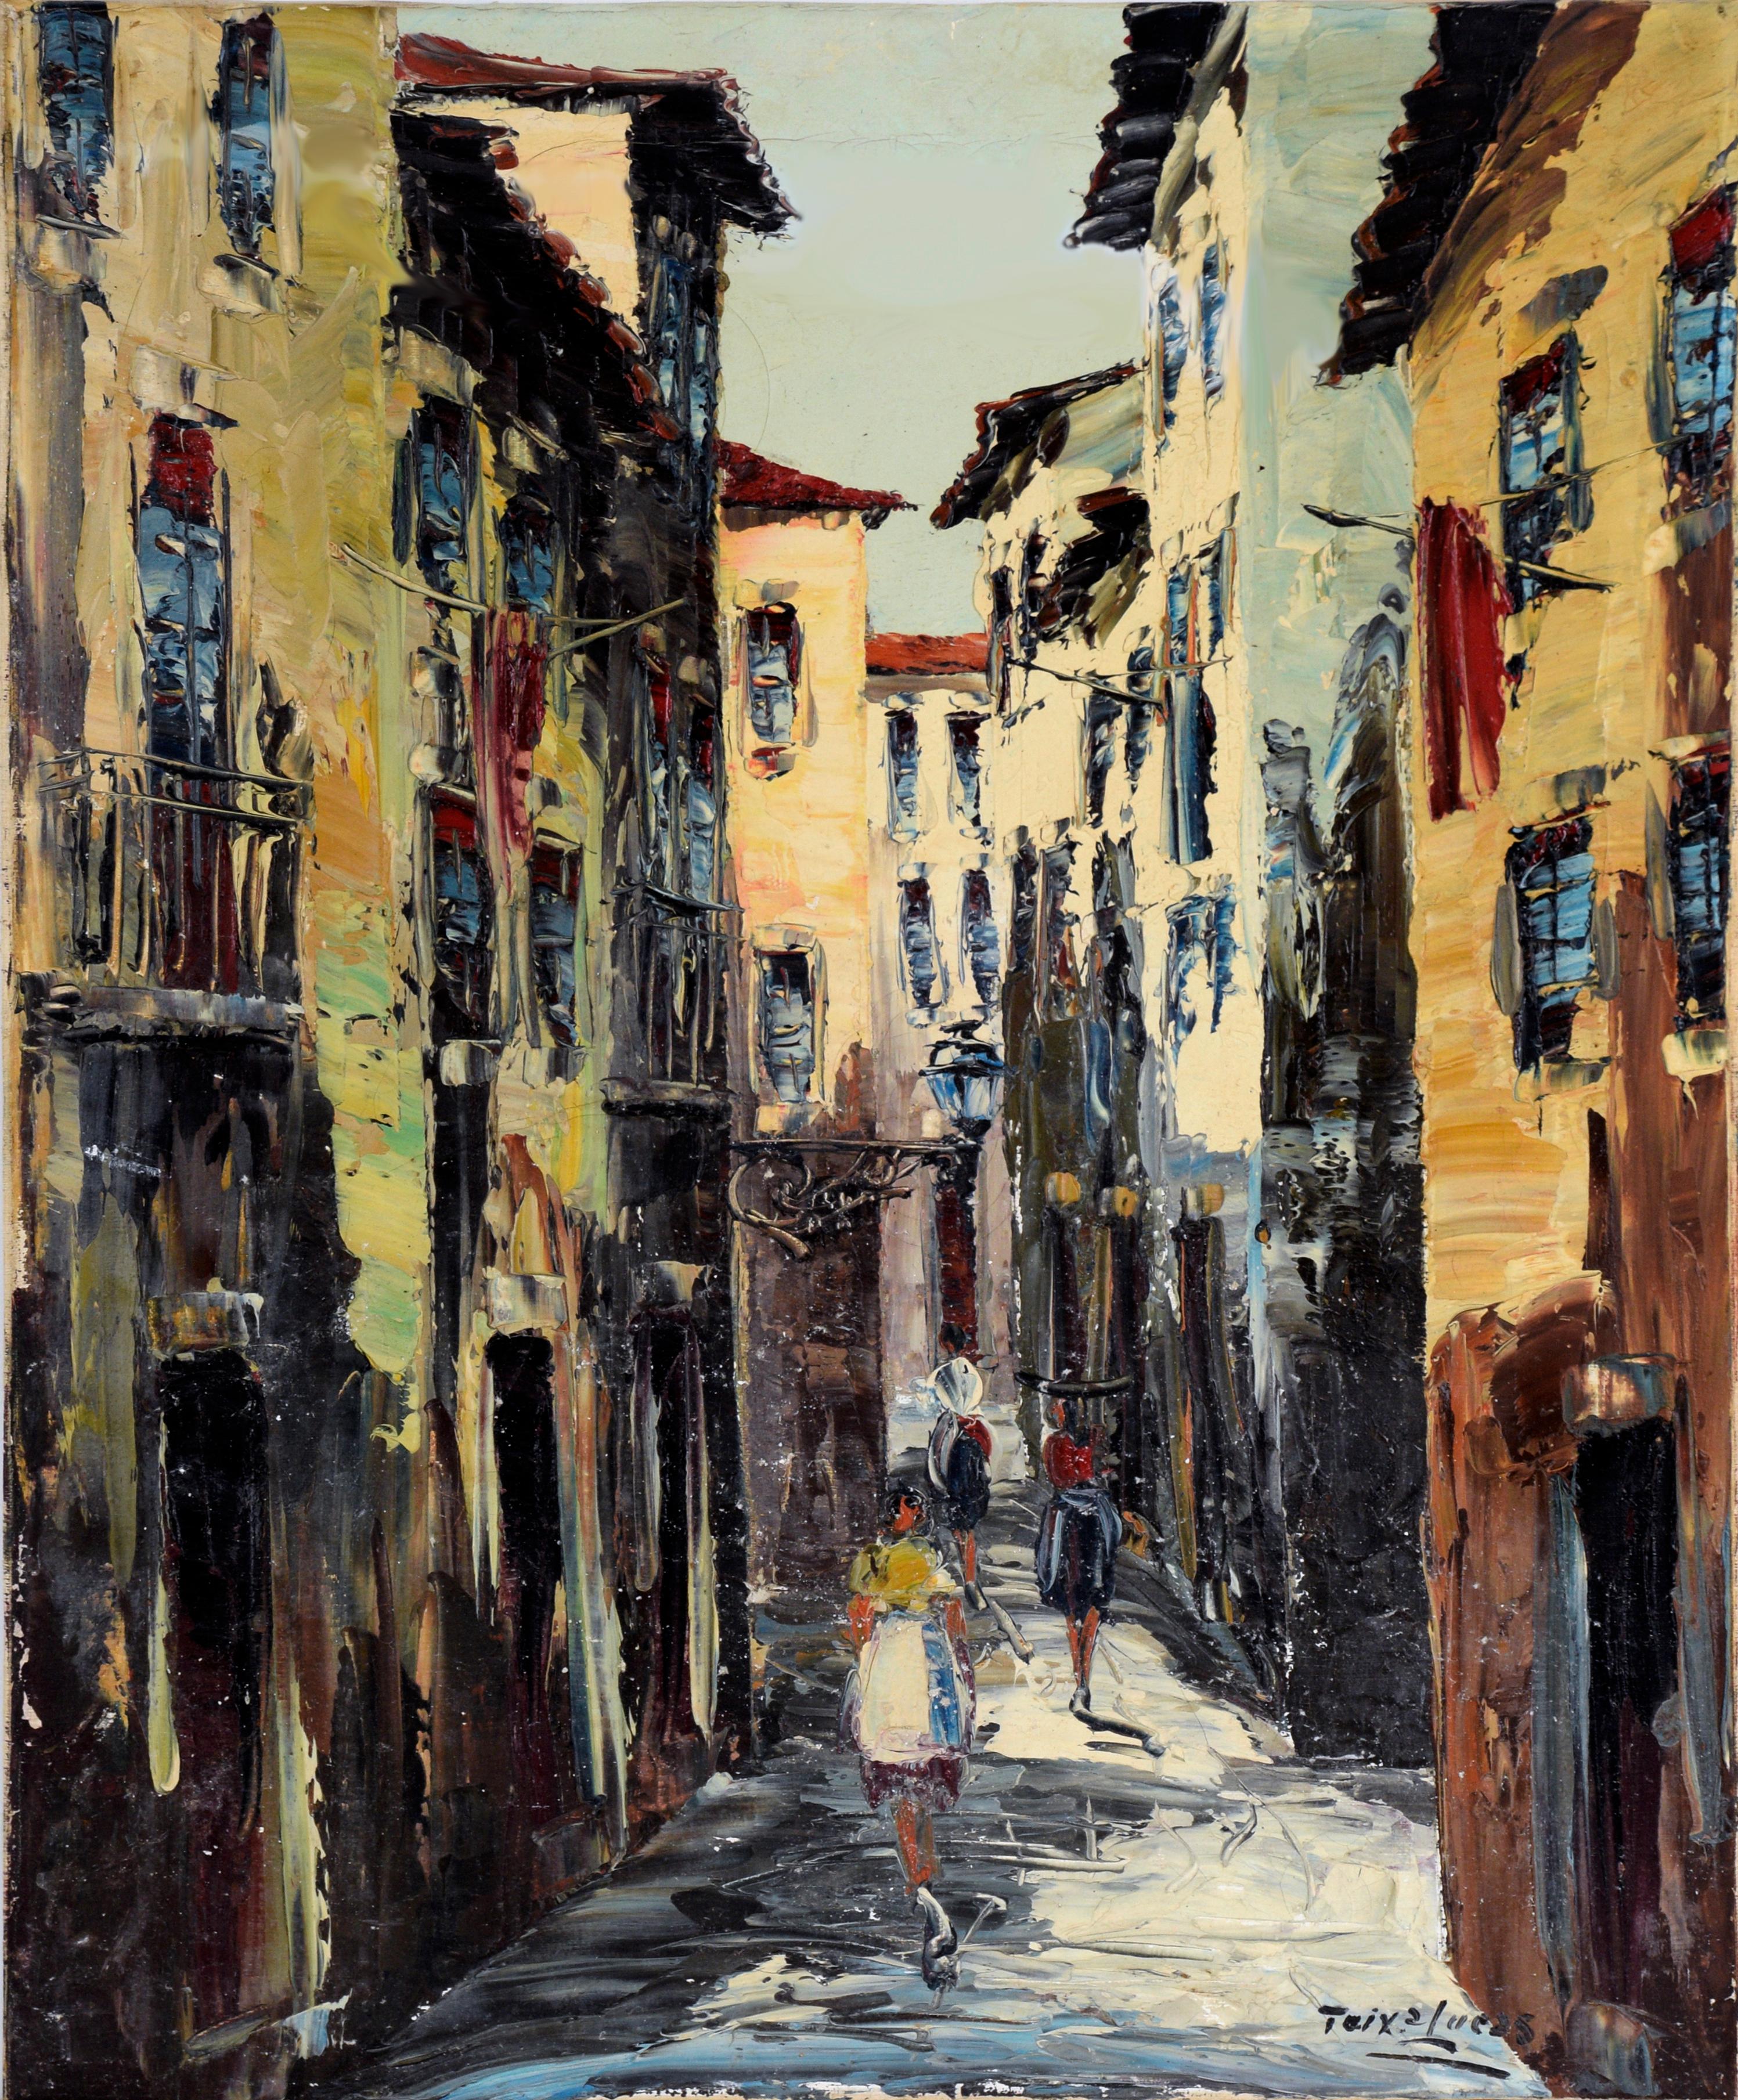 Lucas Teixeira Figurative Painting - Portuguese Street Scene Vintage Oil on Canvas